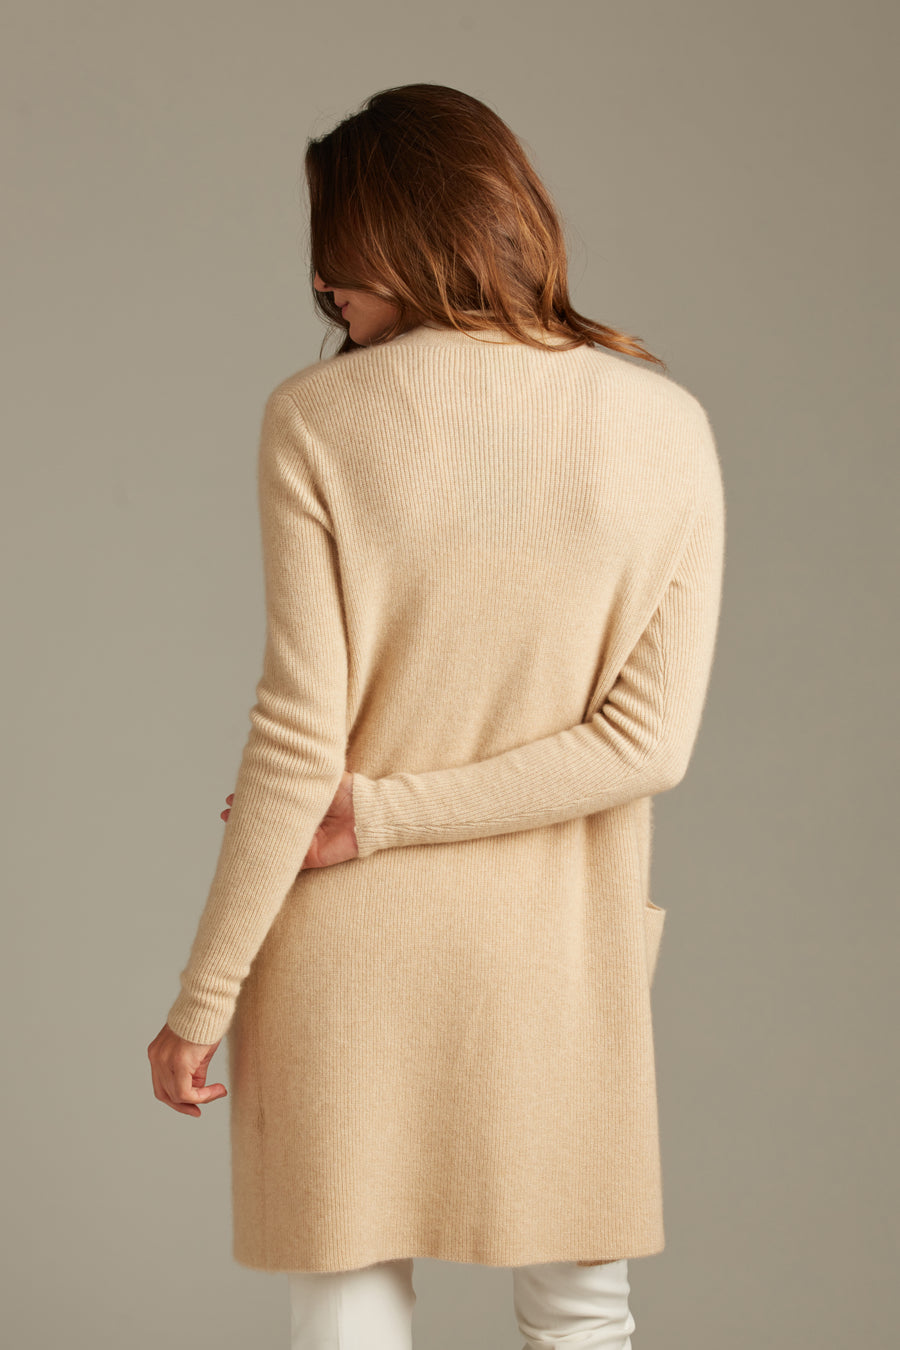 pine cashmere morgan women's 100% pure organic cashmere cardigan sweater in tan beige